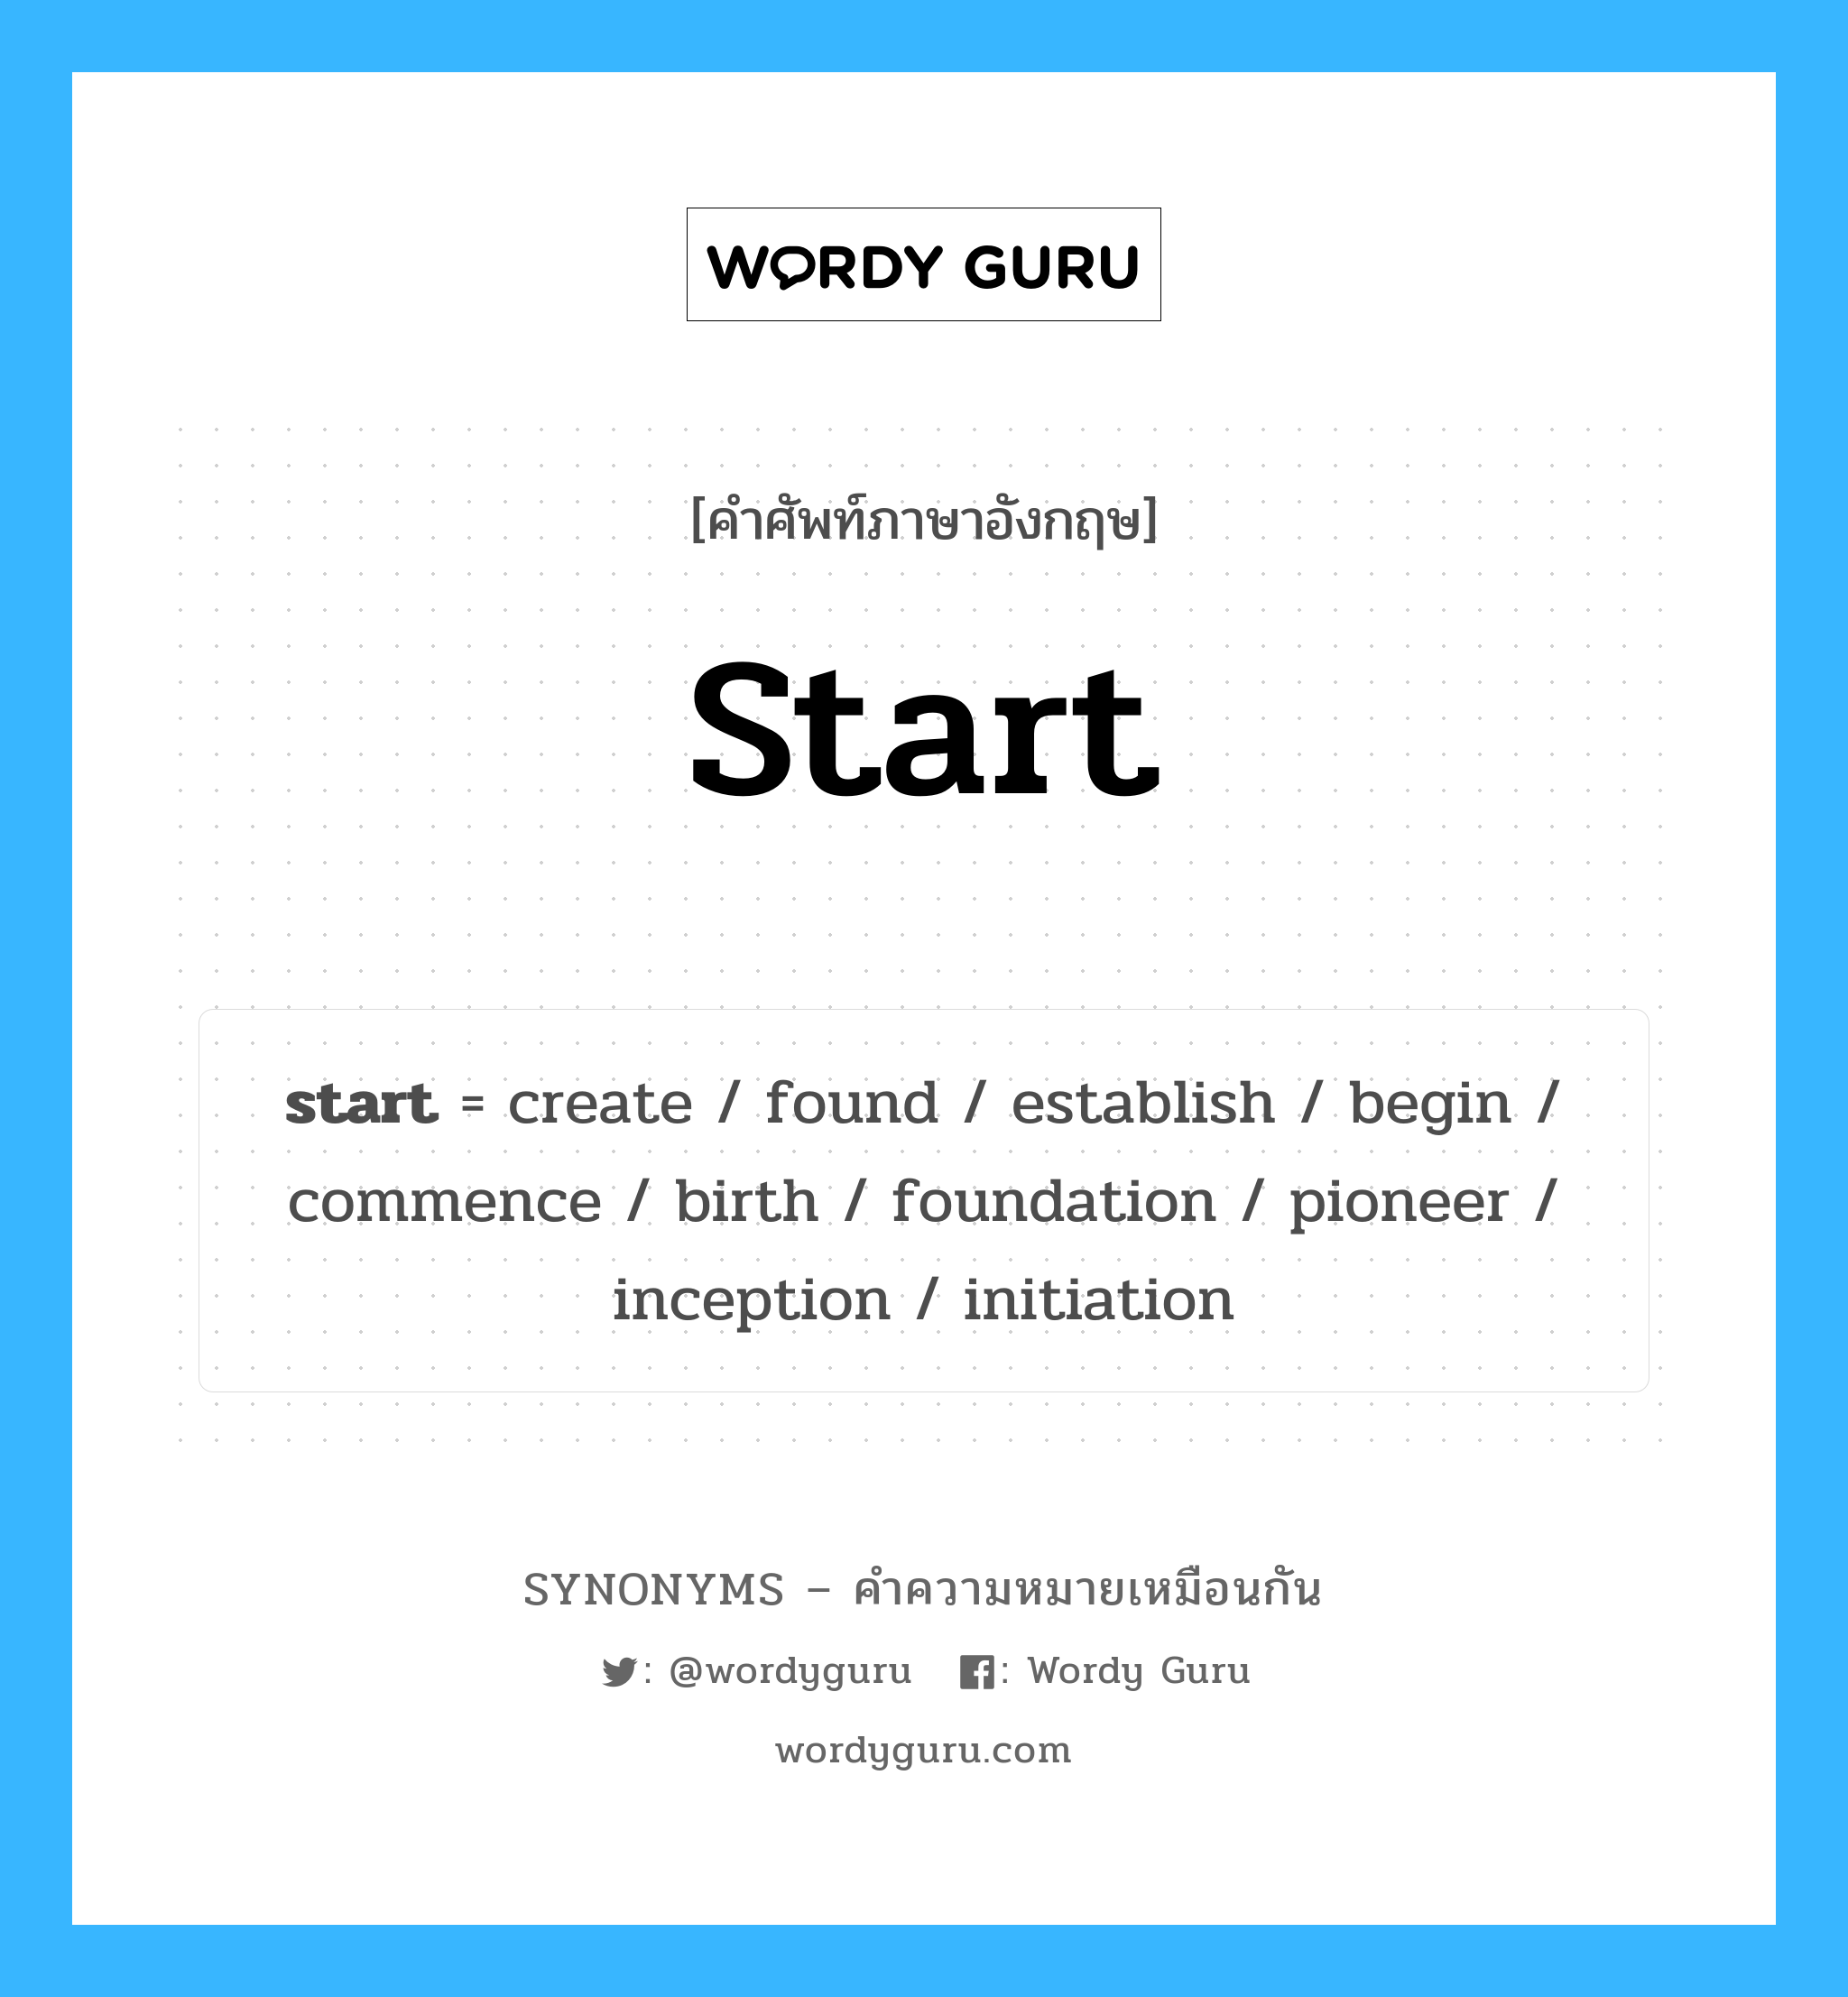 create เป็นหนึ่งใน start และมีคำอื่น ๆ อีกดังนี้, คำศัพท์ภาษาอังกฤษ create ความหมายคล้ายกันกับ start แปลว่า สร้าง หมวด start